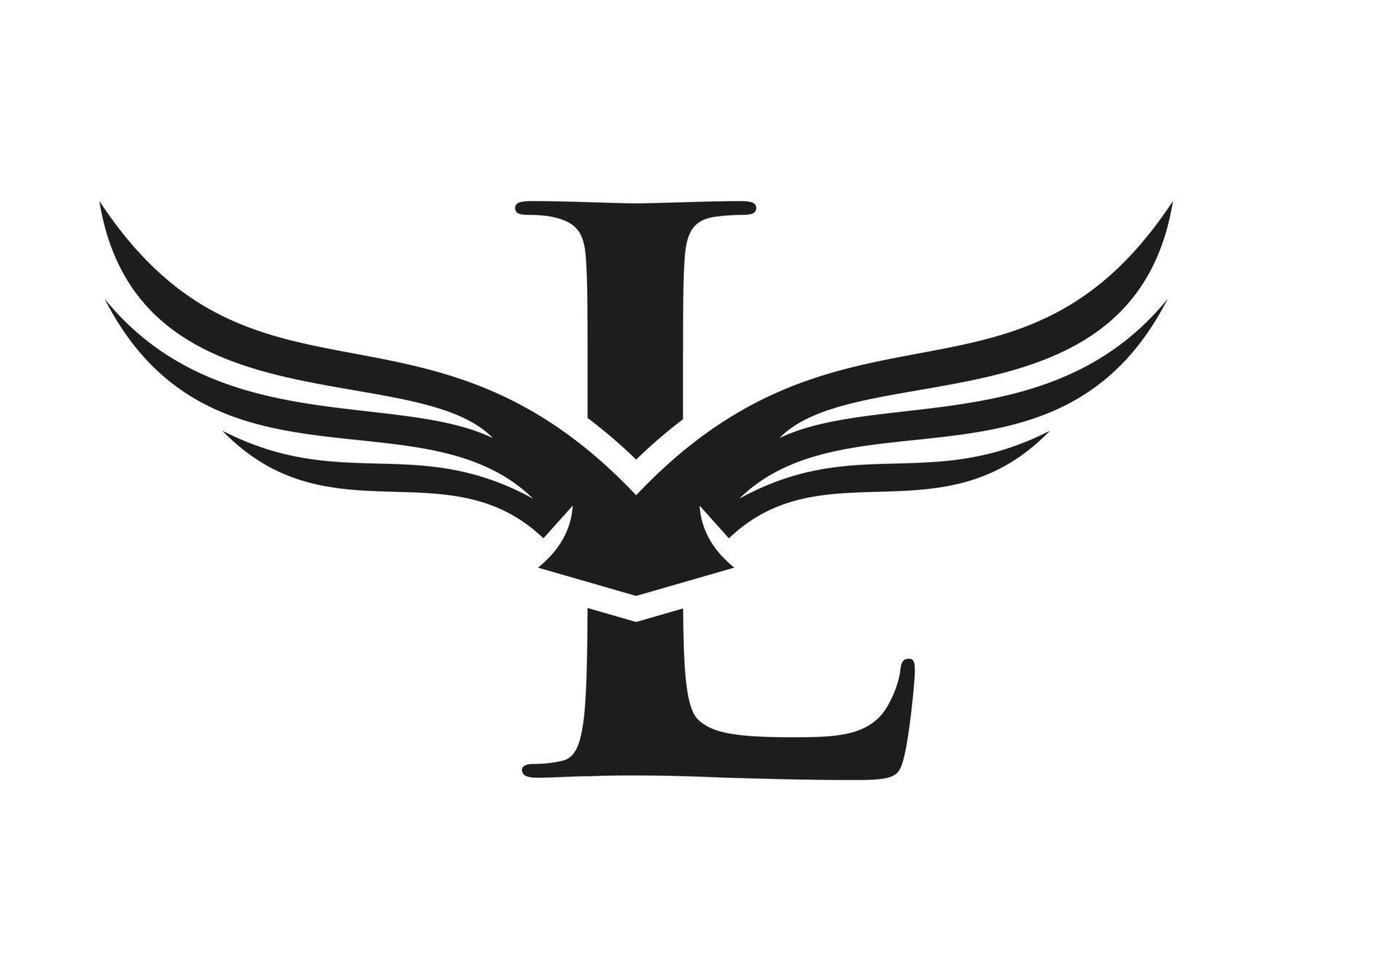 logotipo de letra l ala para transporte, flete, plantilla de vector de logotipo de transporte